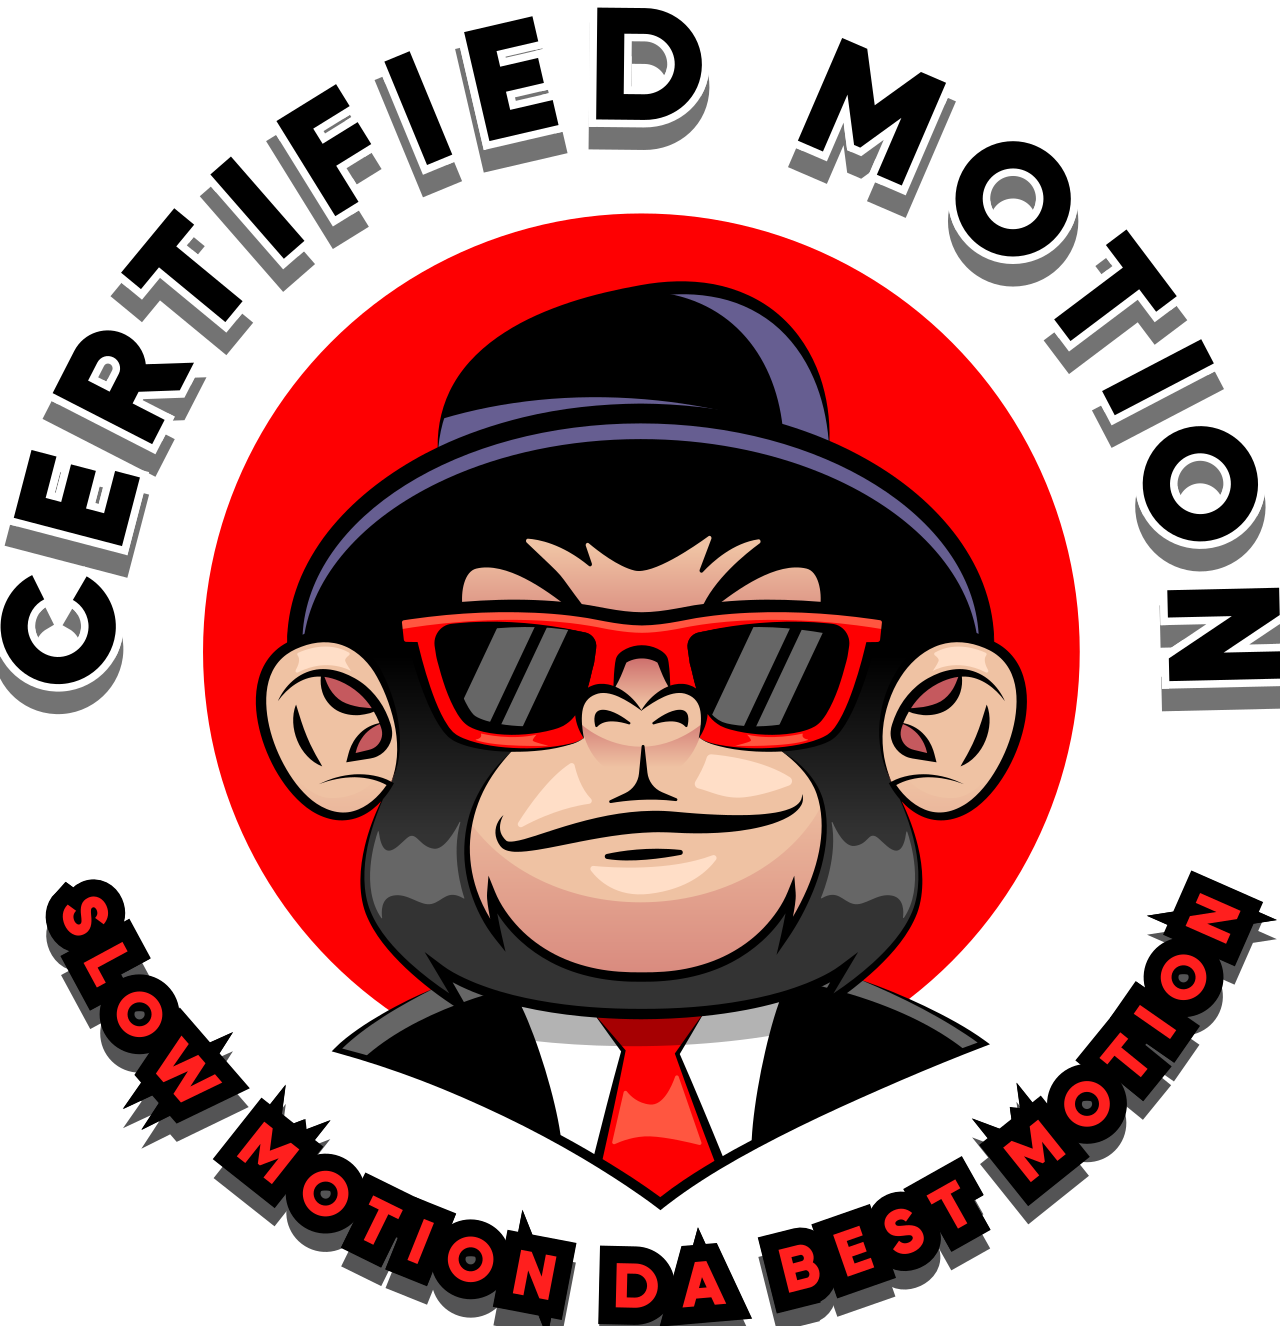 Certified Motion's logo